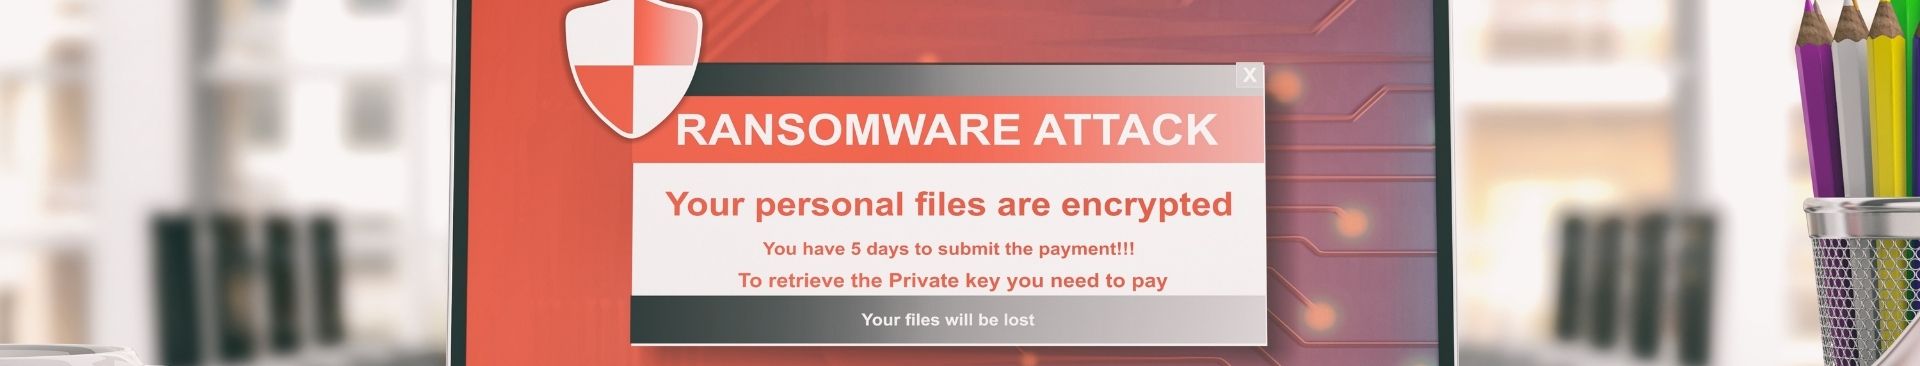 cyber scam ransomware attack